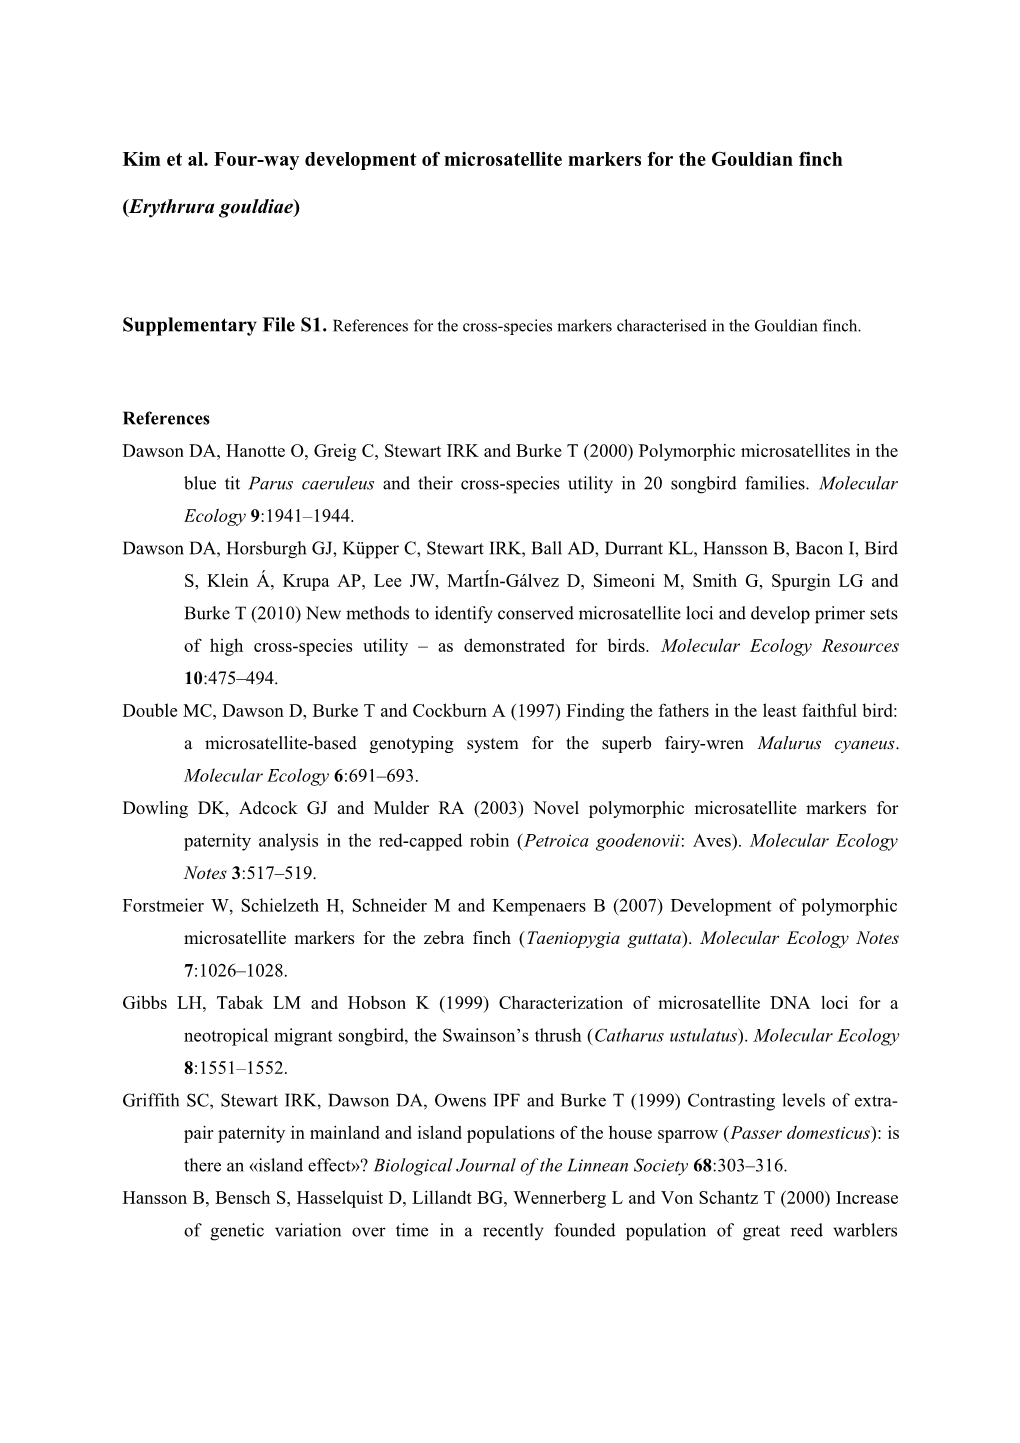 Kim Et Al. Four-Way Development of Microsatellite Markers for the Gouldian Finch (Erythrura